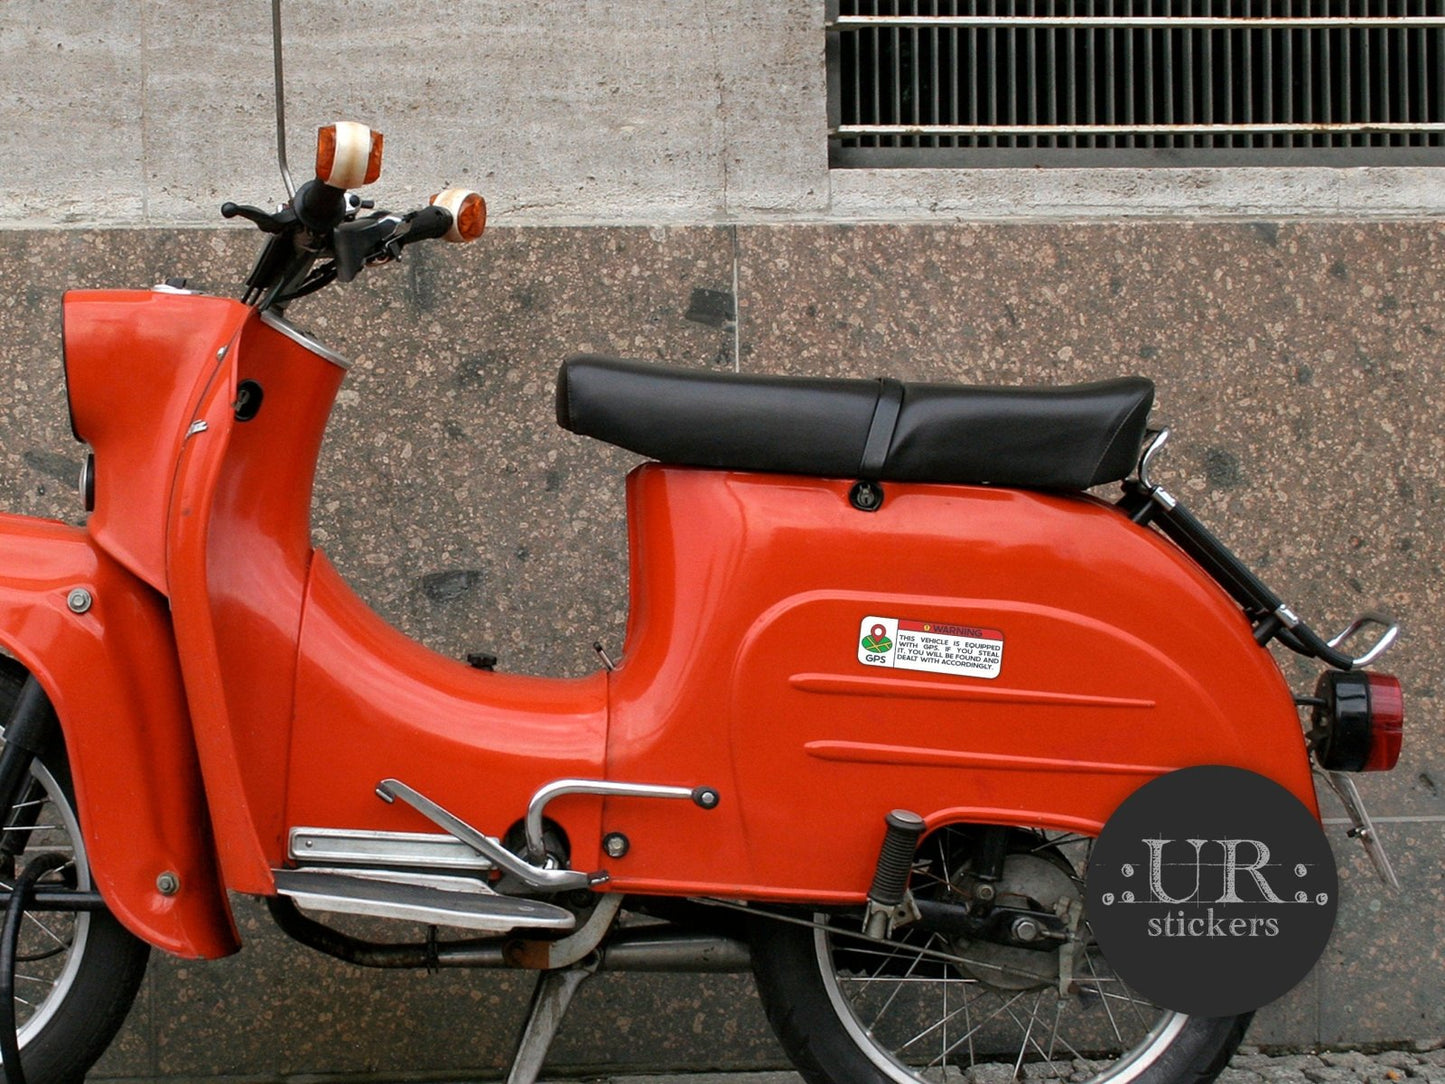 Motorcycle Sticker, Vehicle GPS Sticker - Stickers - UpperRoomPrints